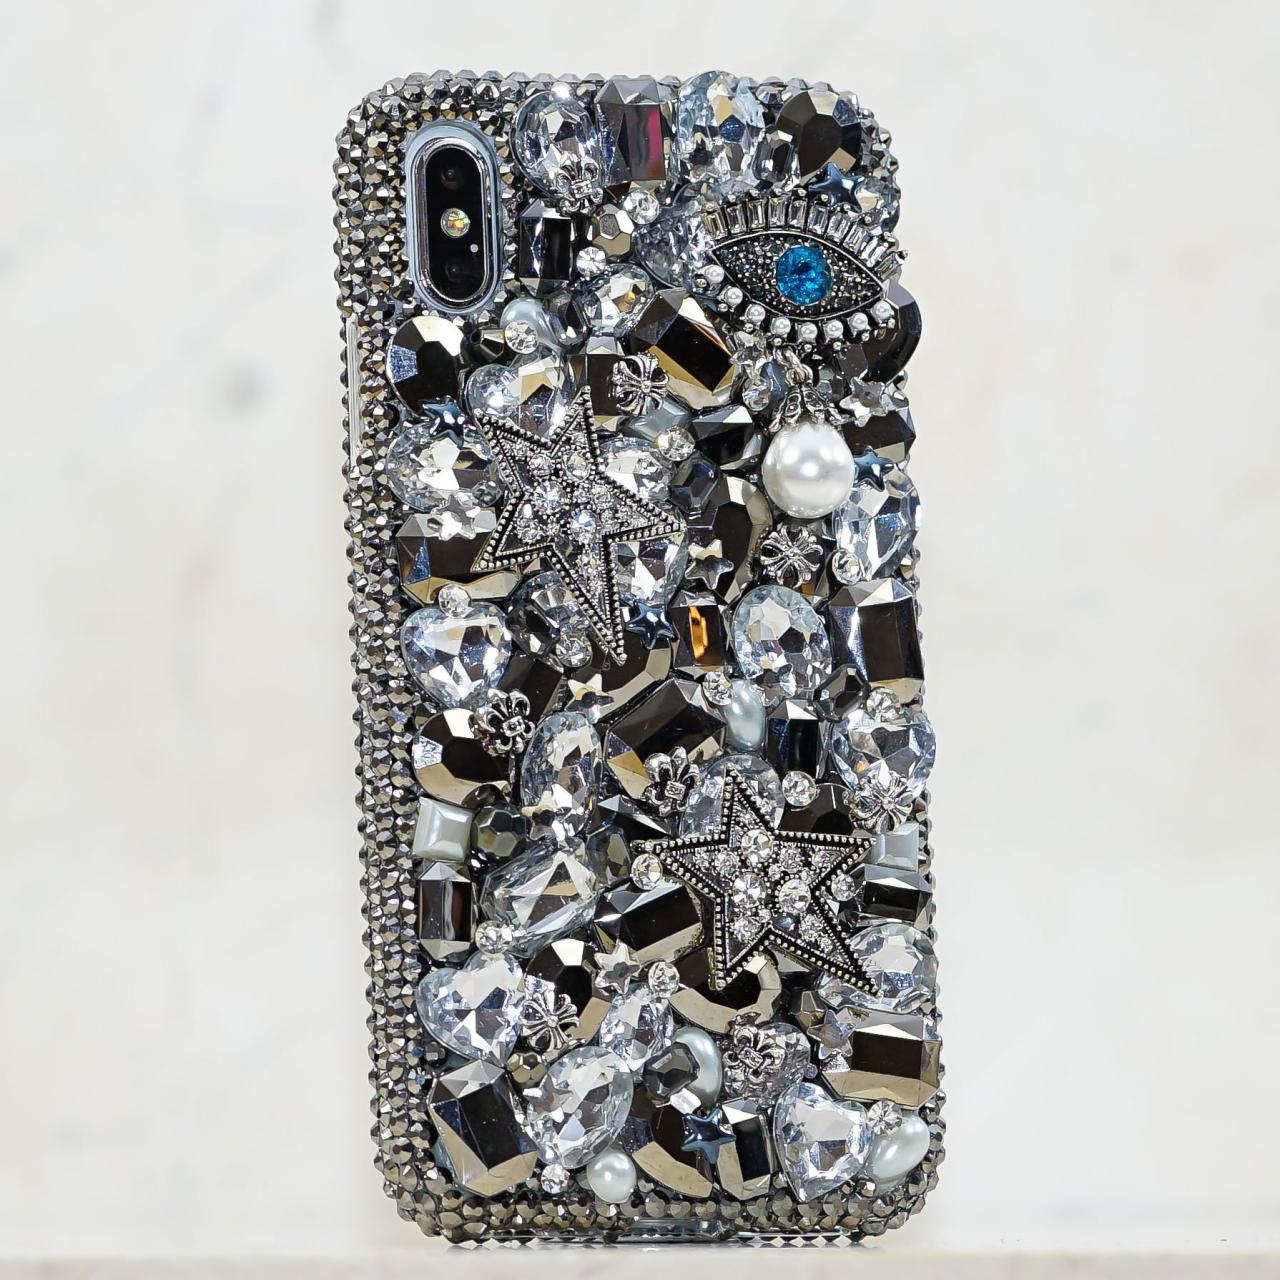 Evil Eye Super Star Pearls Genuine Metallic Crystals Diamond Sparkle Case For iPhone X XS Max XR 7 8 Plus Samsung Galaxy S9 Plus Note 8 / 9